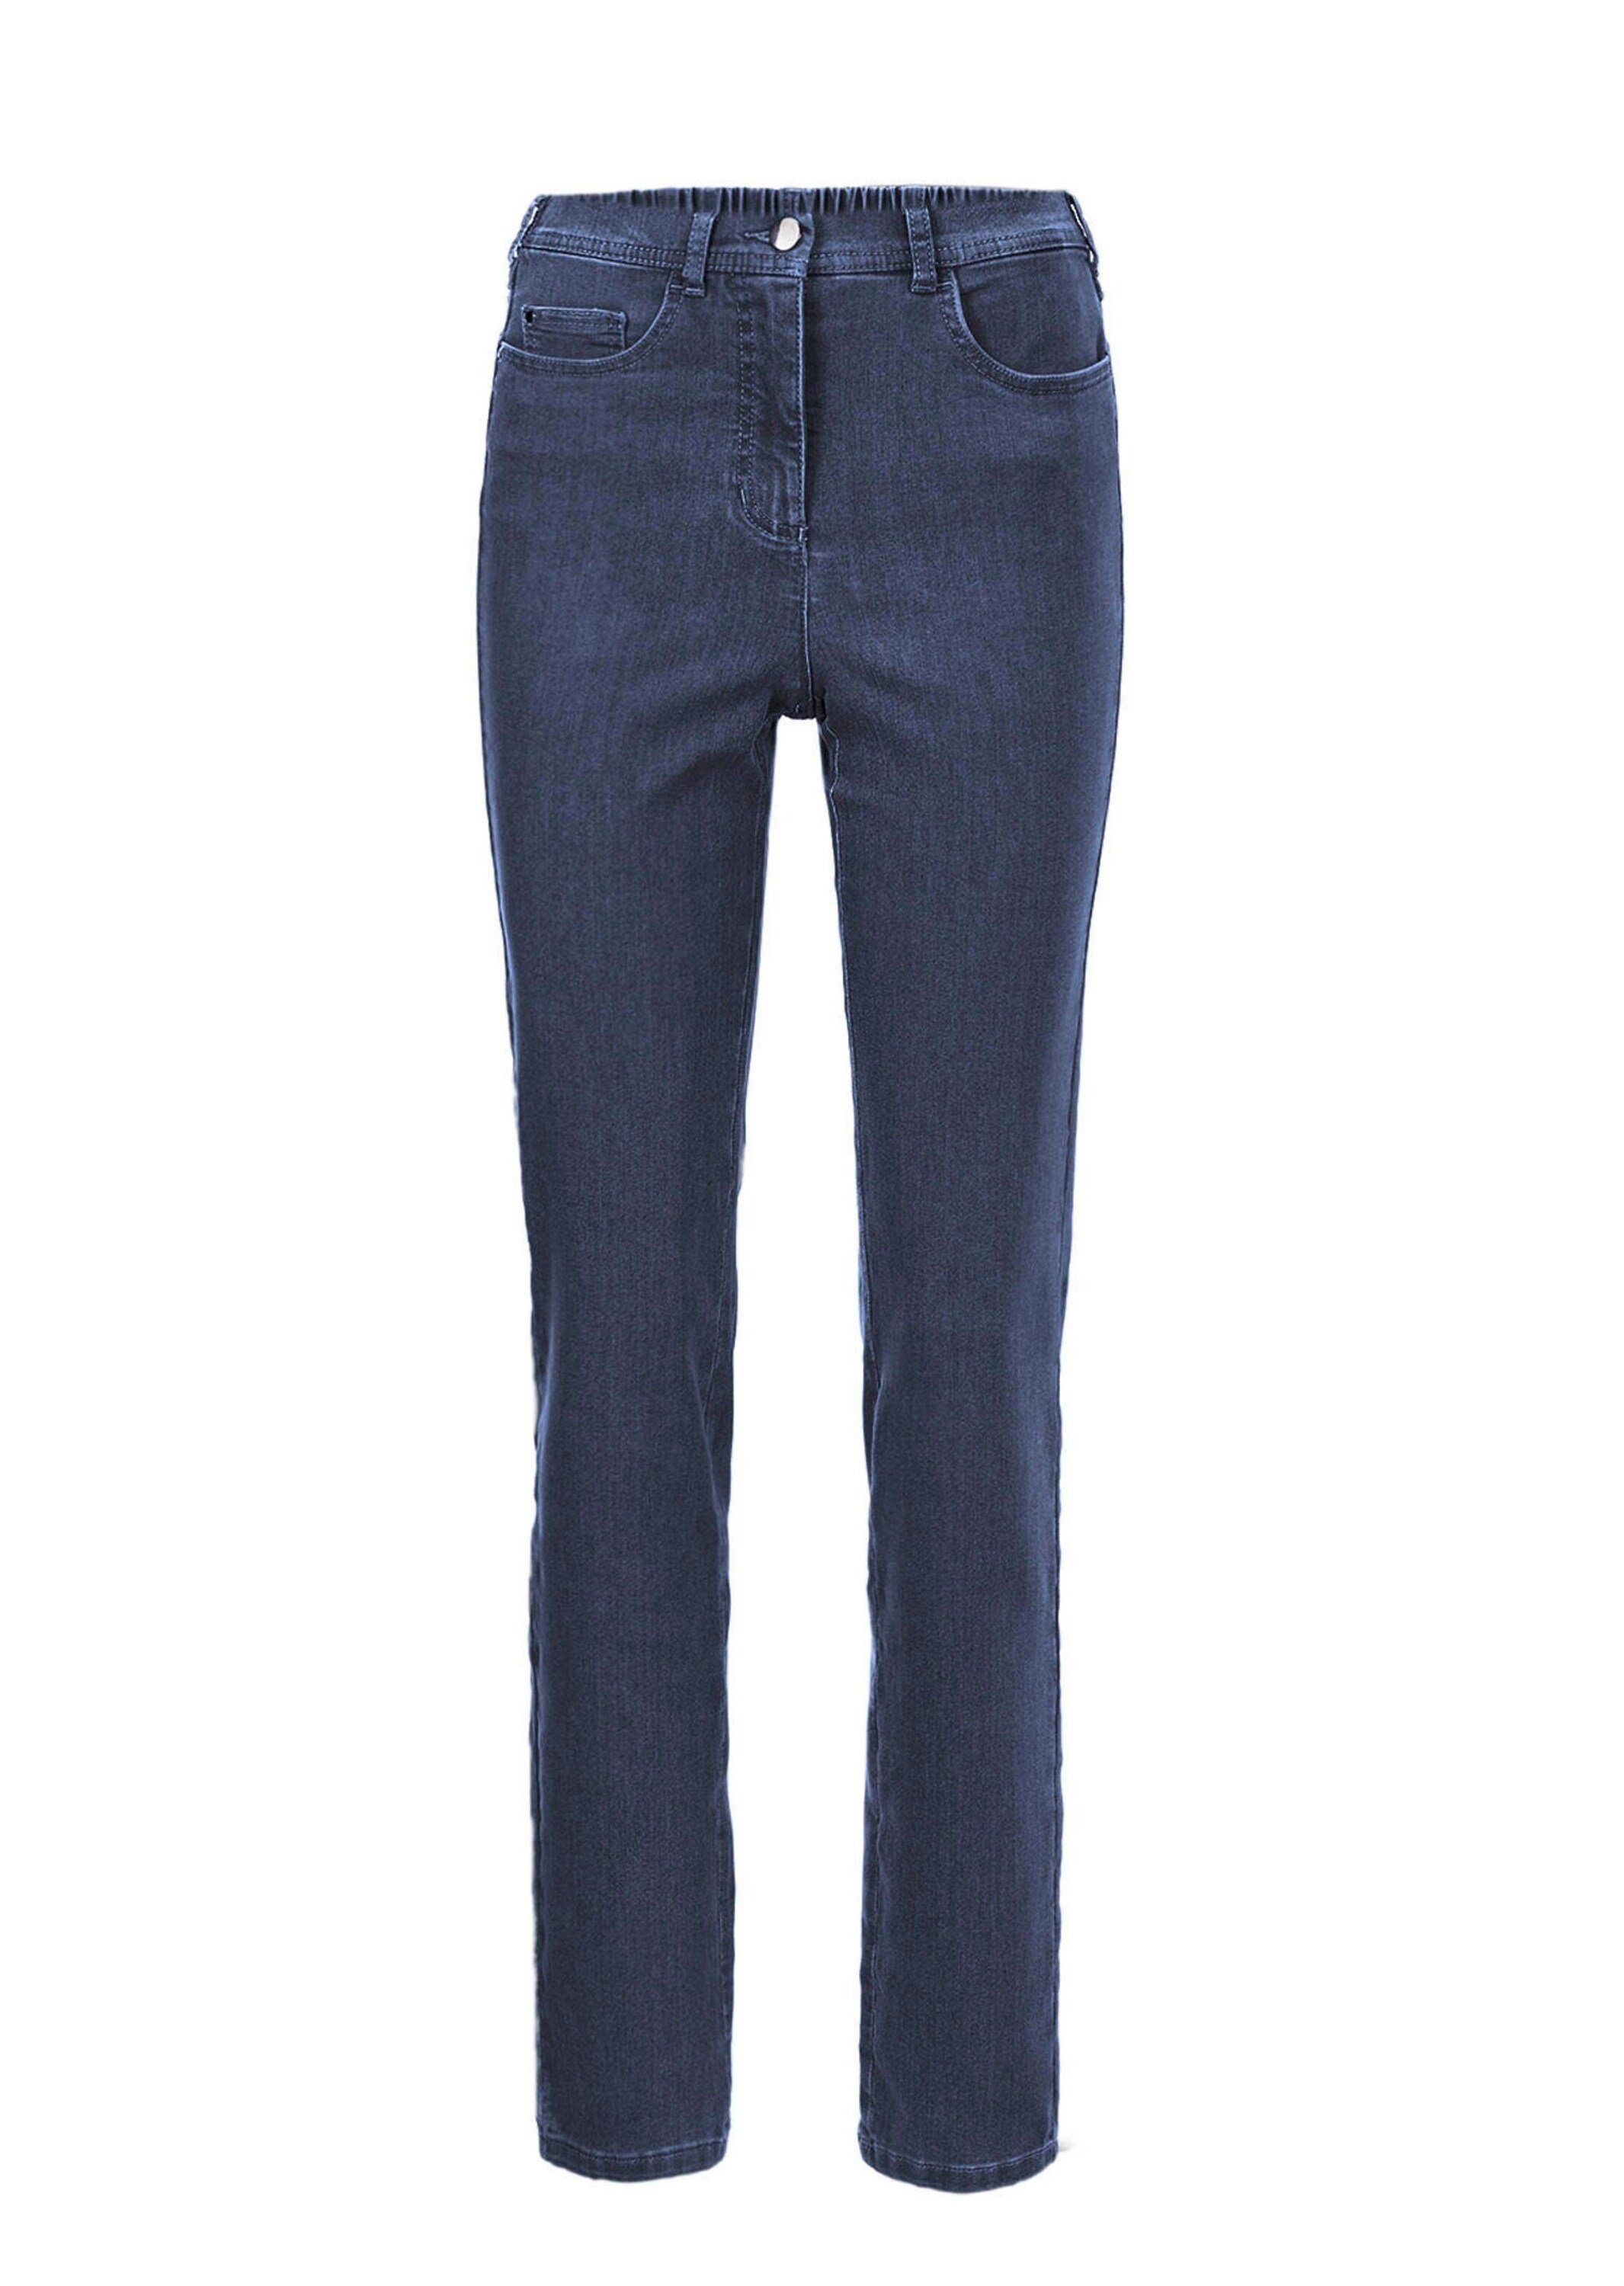 Kurzgröße: Bequeme dunkelblau Jeans GOLDNER Bequeme High-Stretch-Jeanshose